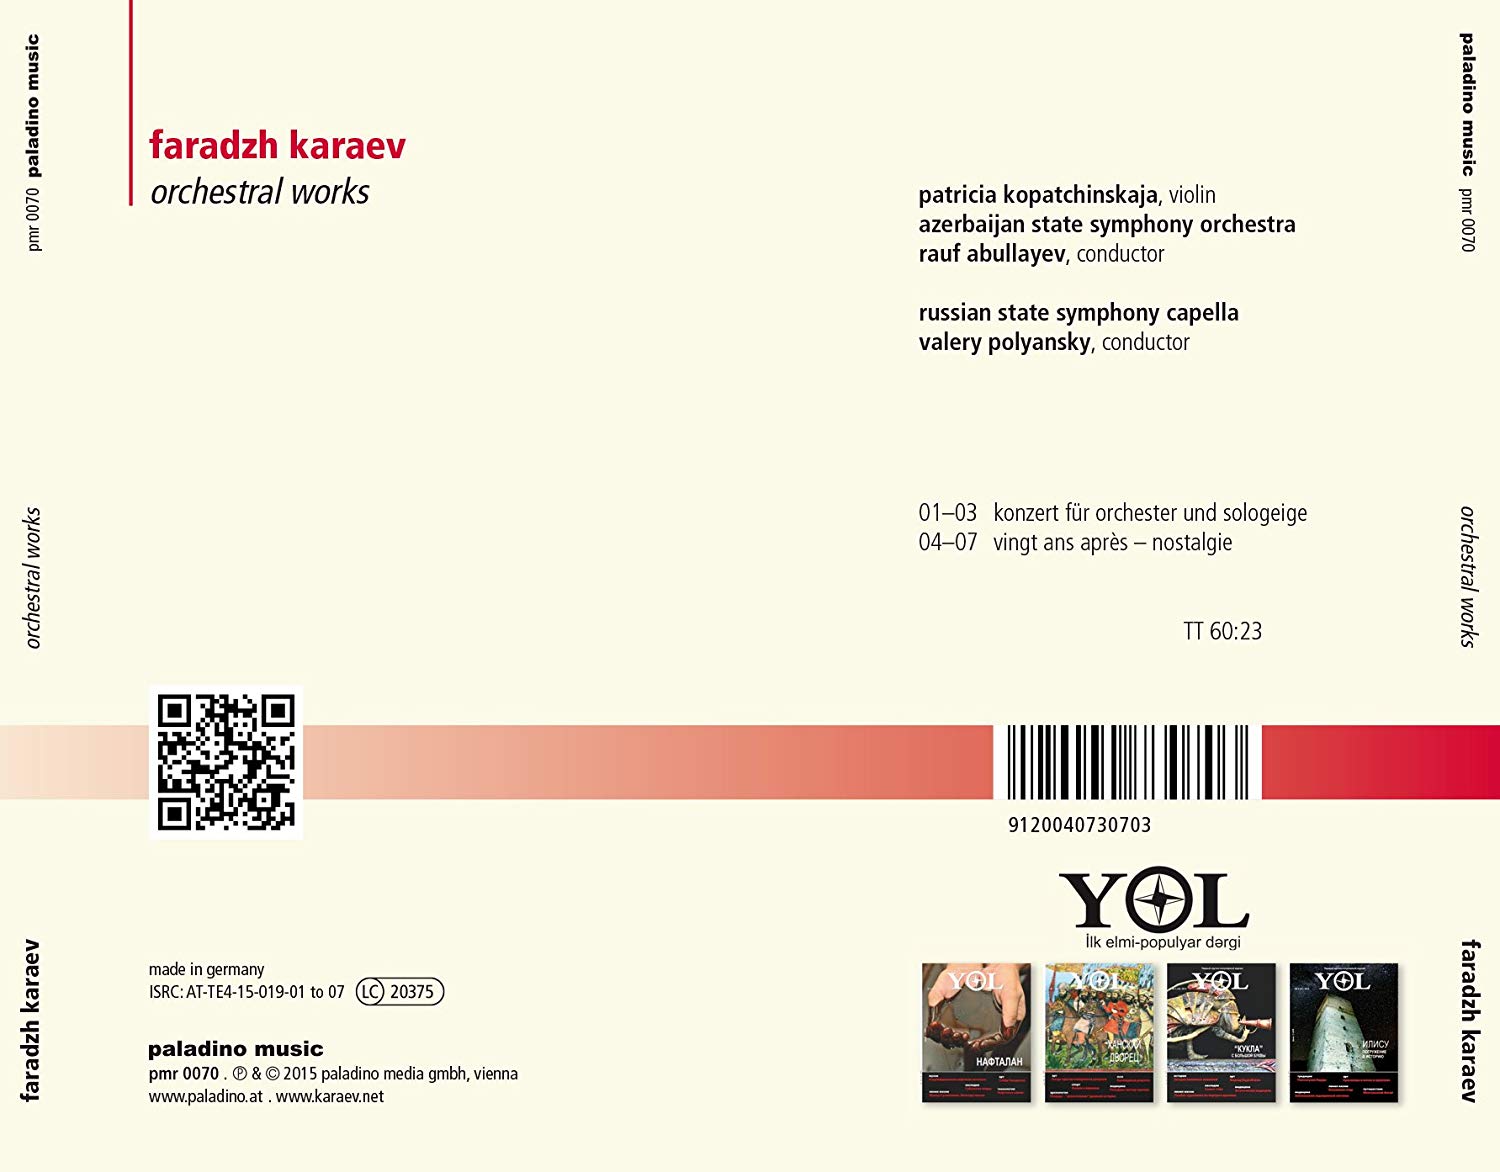 Karaev, Faradzh: Orchestral Works - slide-1